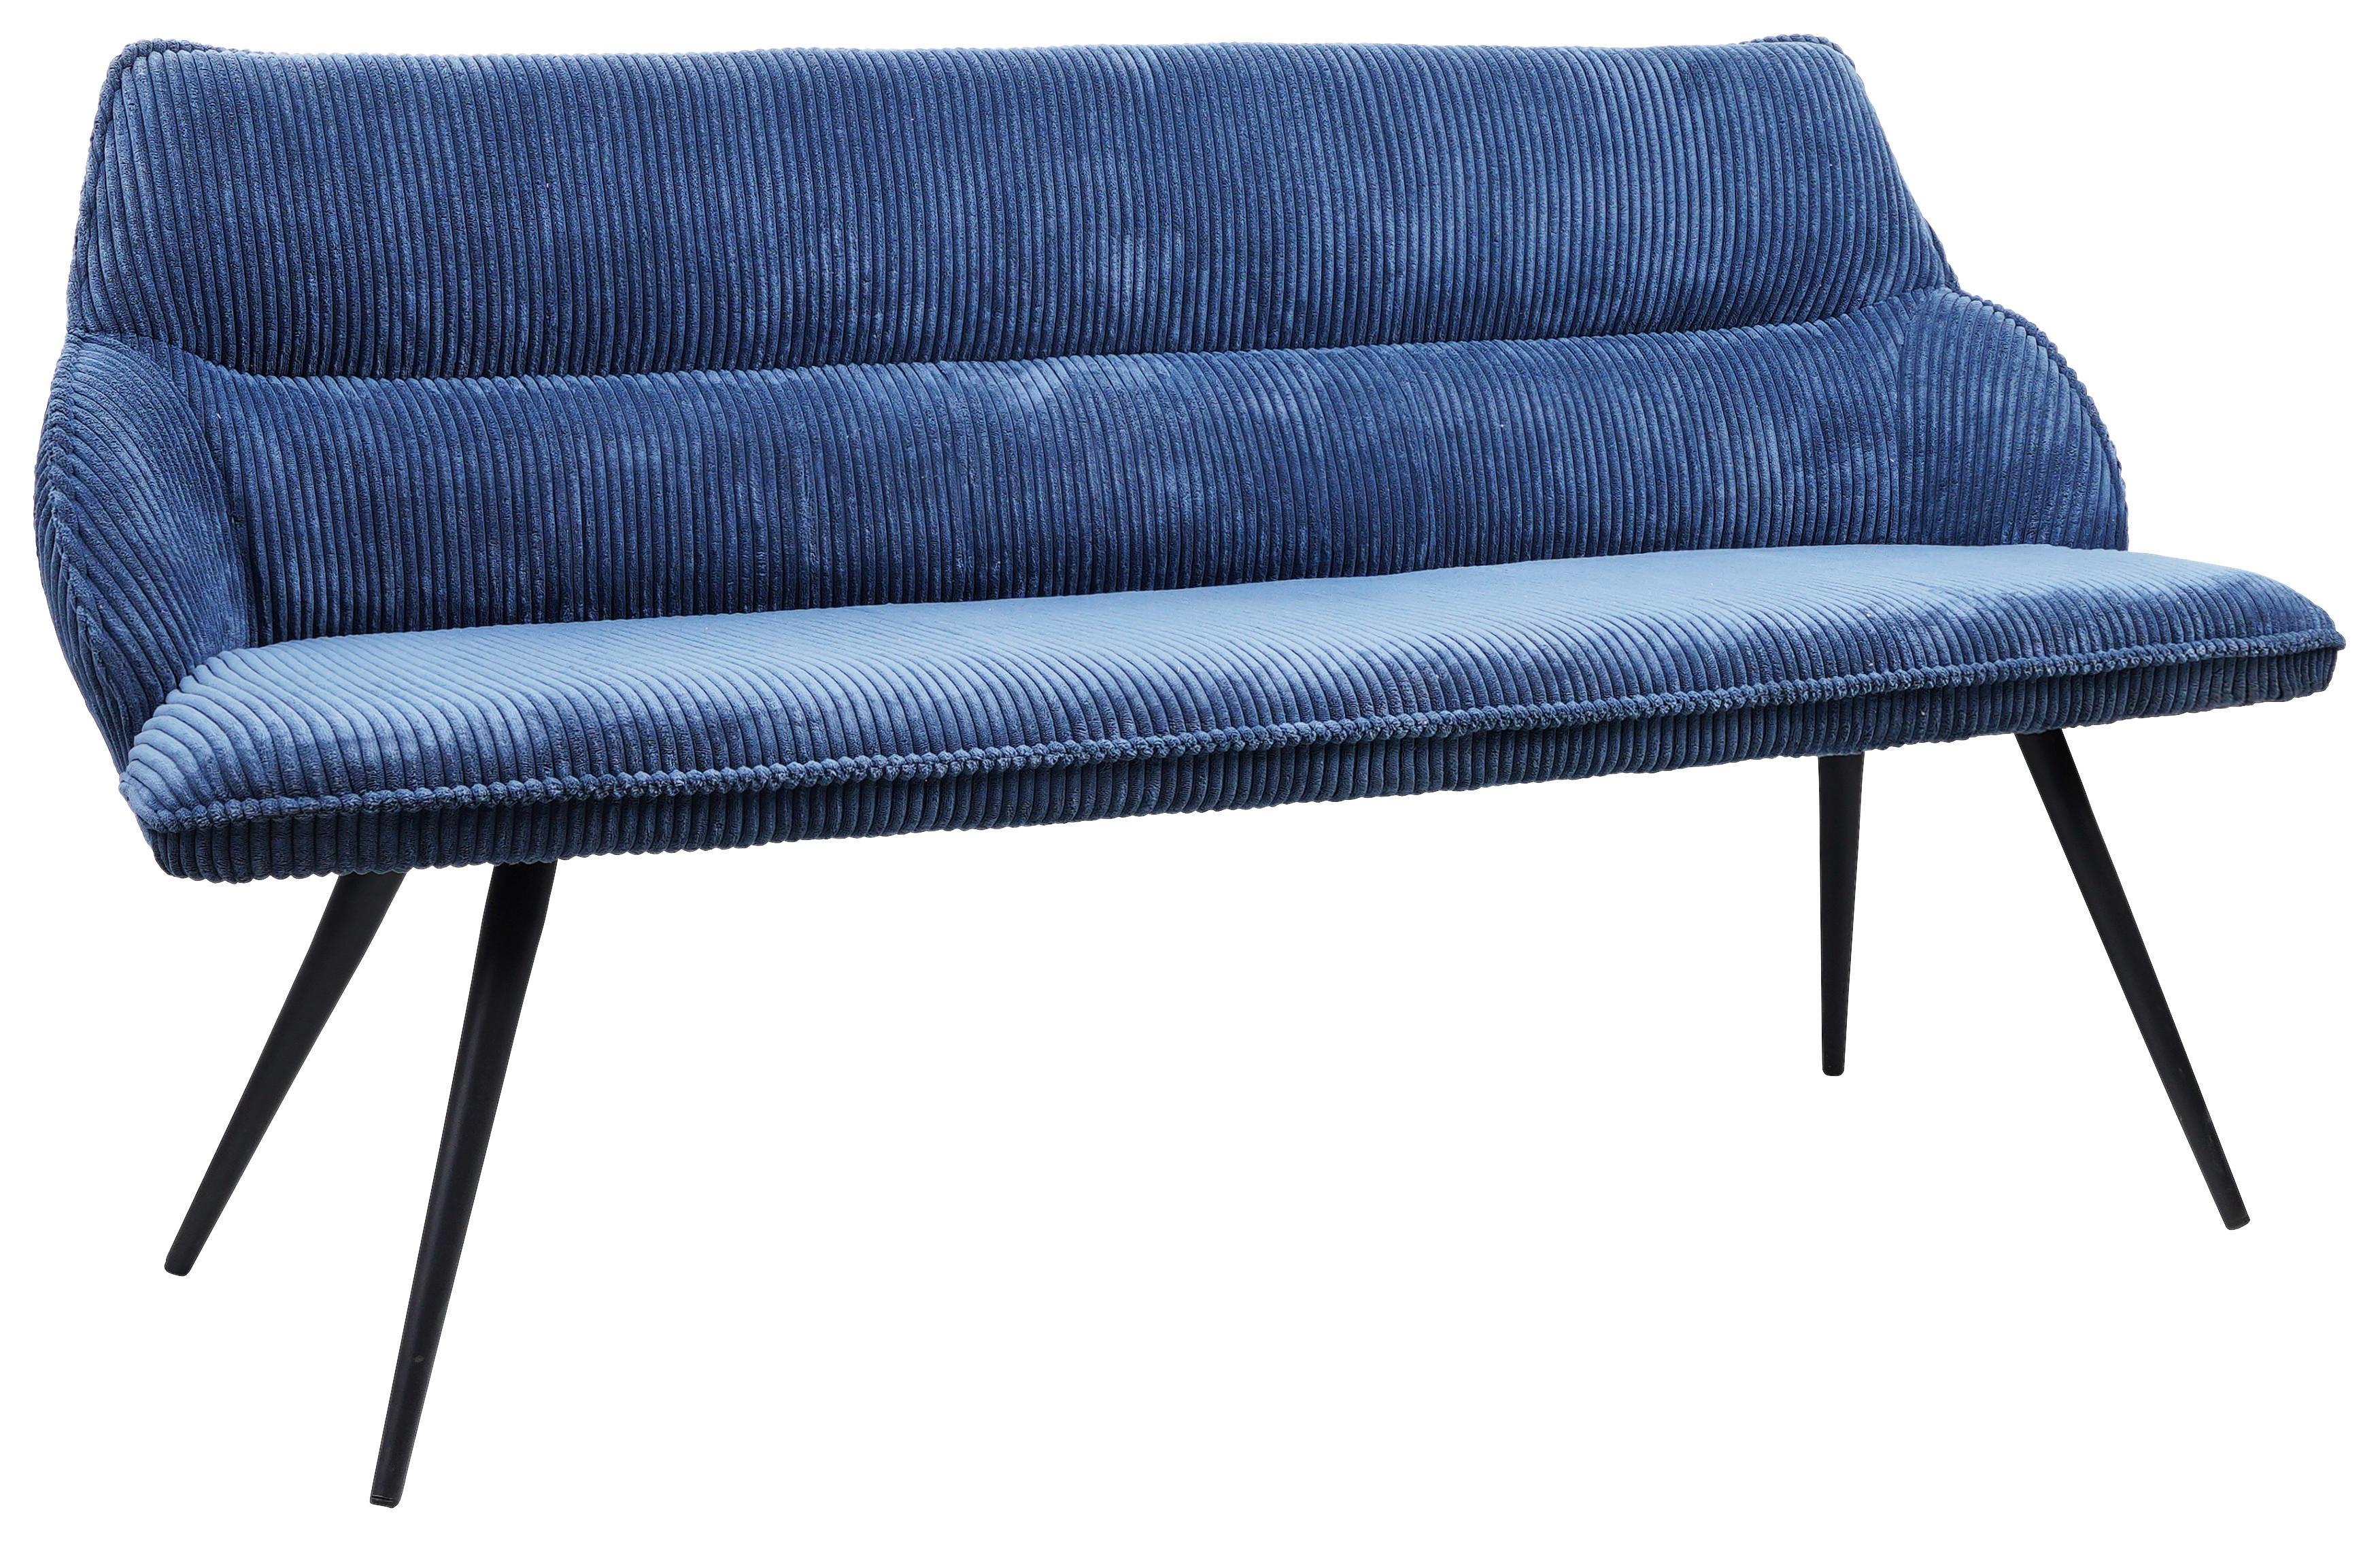 Klop Bursa, Modra - modra/črna, Moderno, kovina/tekstil (163/67/85cm) - Modern Living